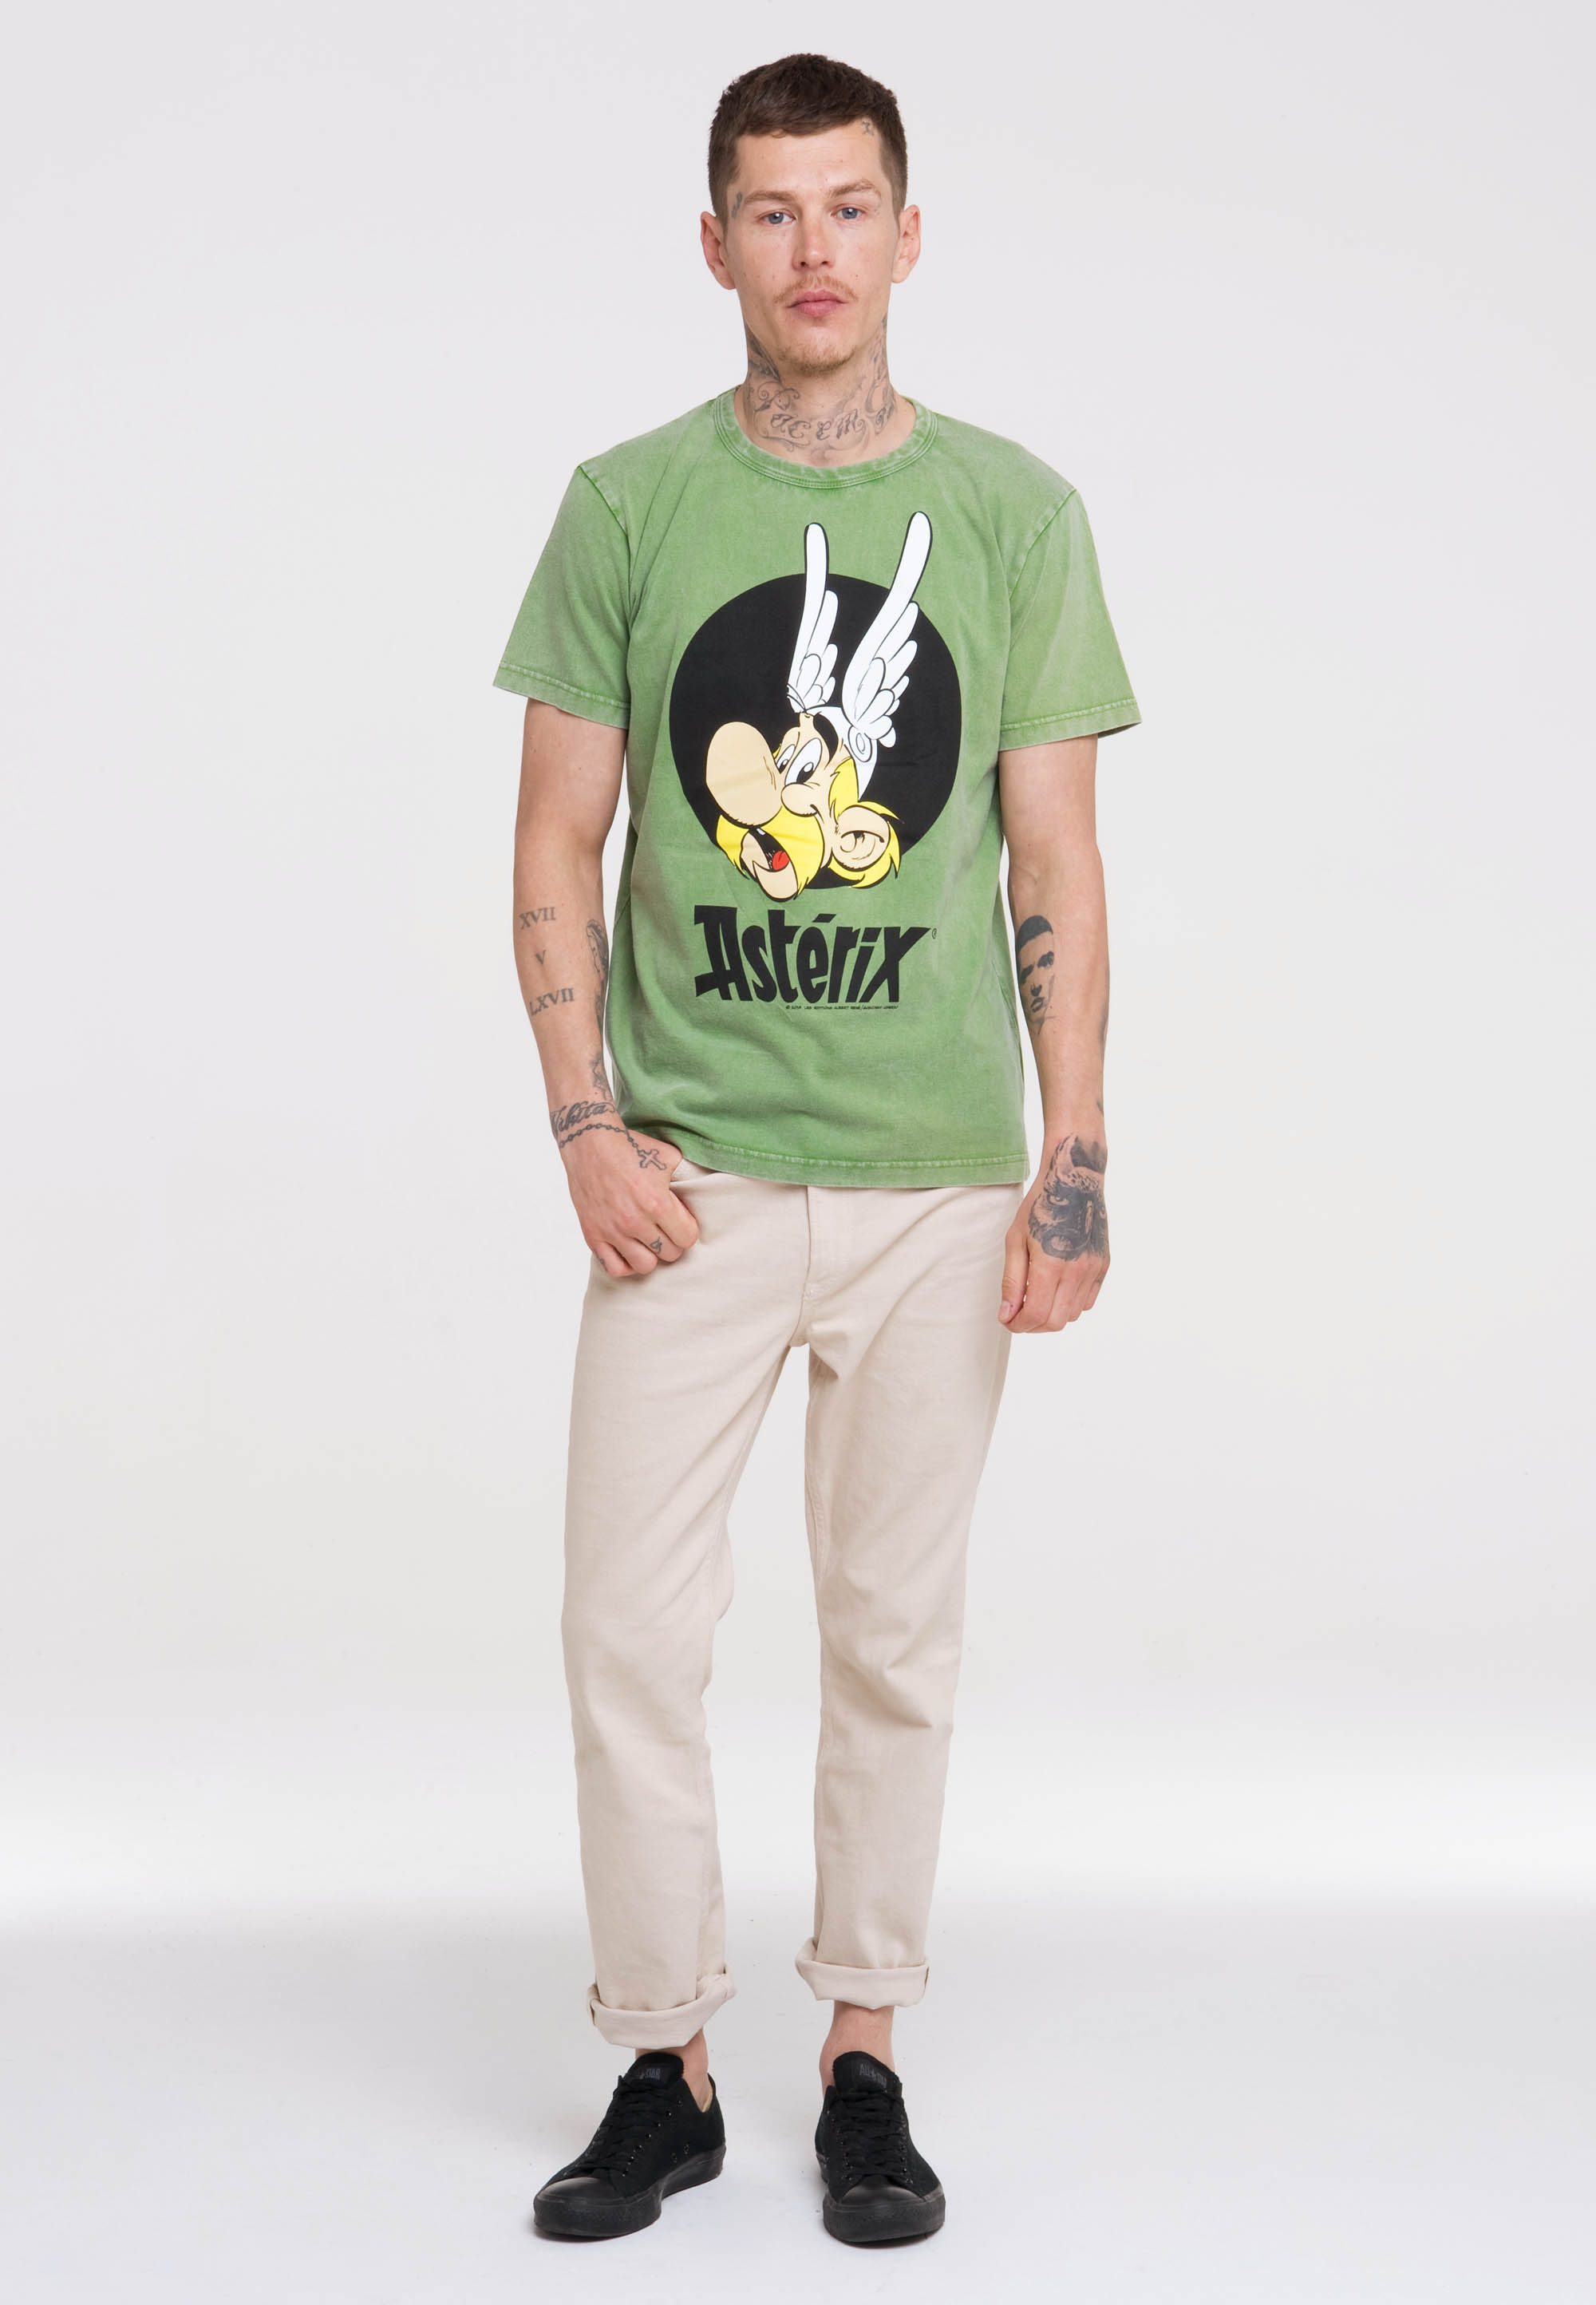 T-shirt 100% cotton Logoshirt® Asterix Portrait eBay (Khaki) 